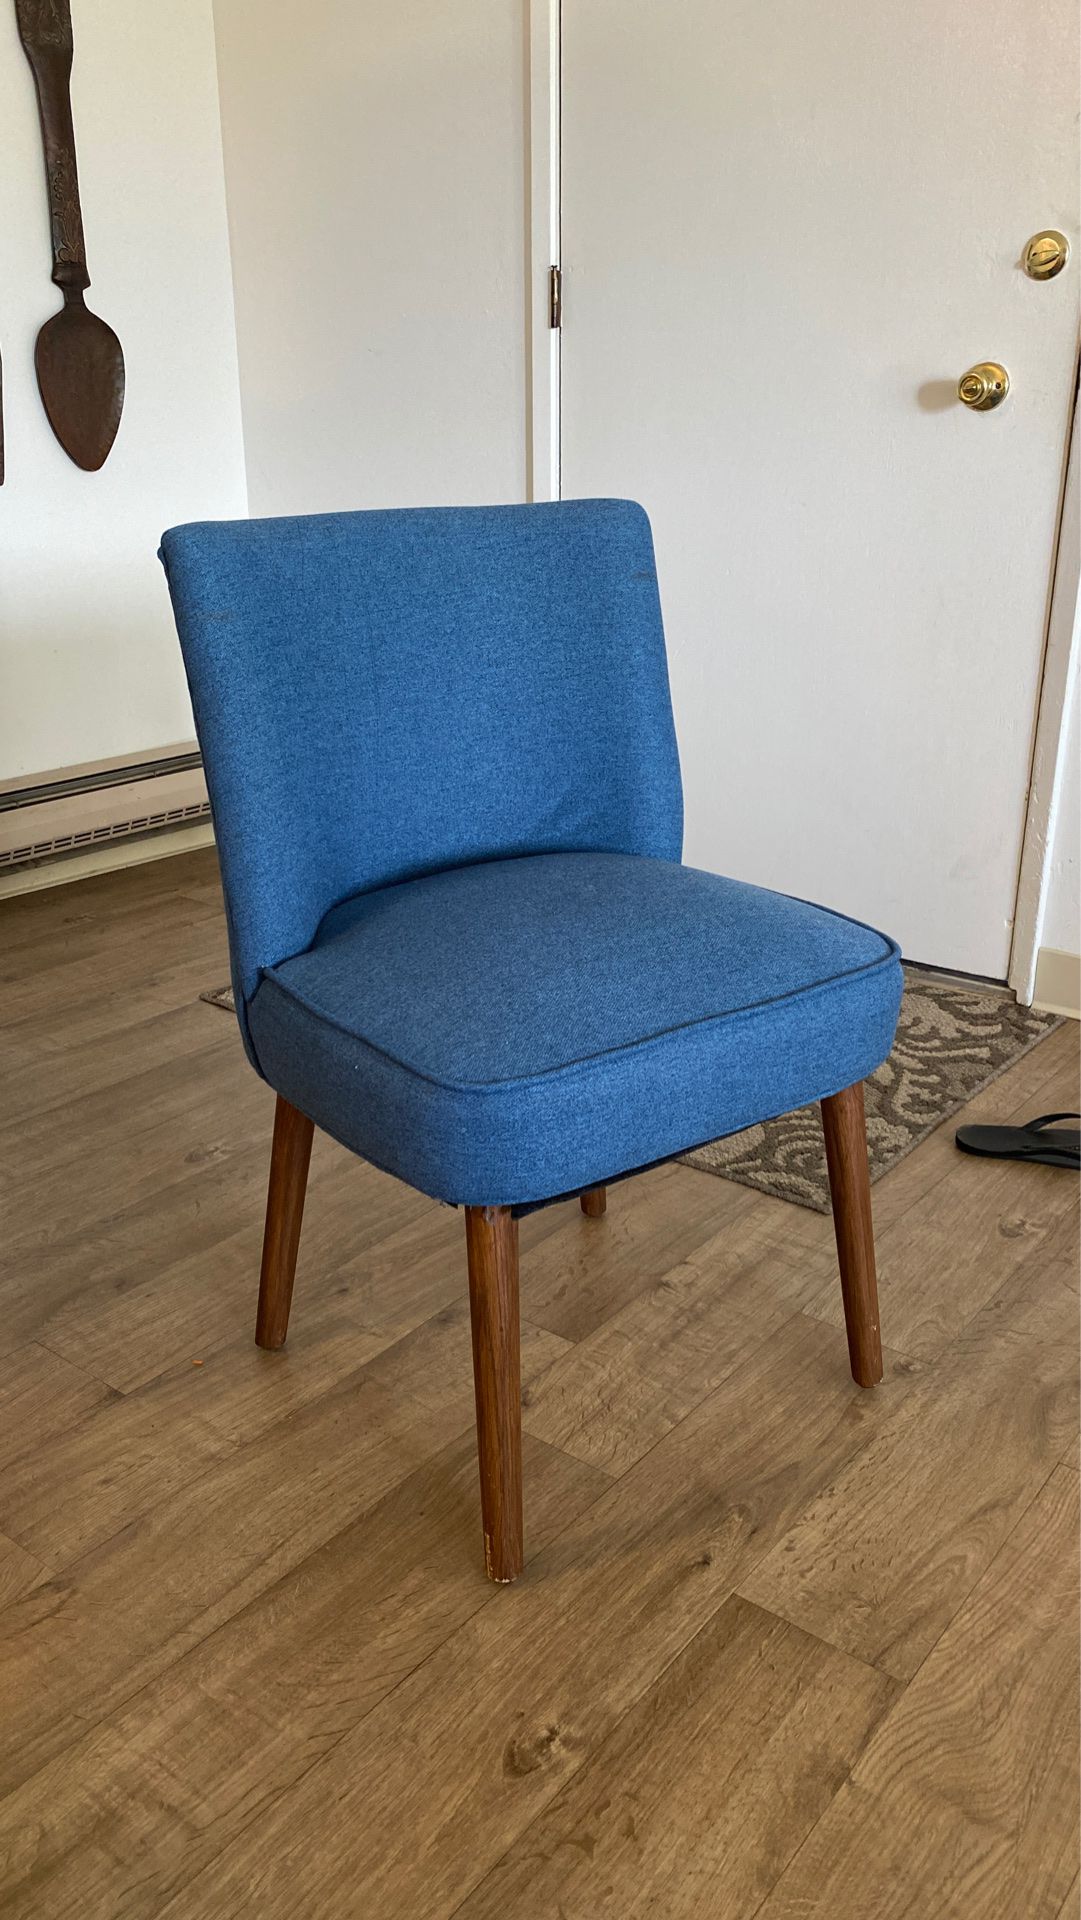 Free Retro cushioned chair